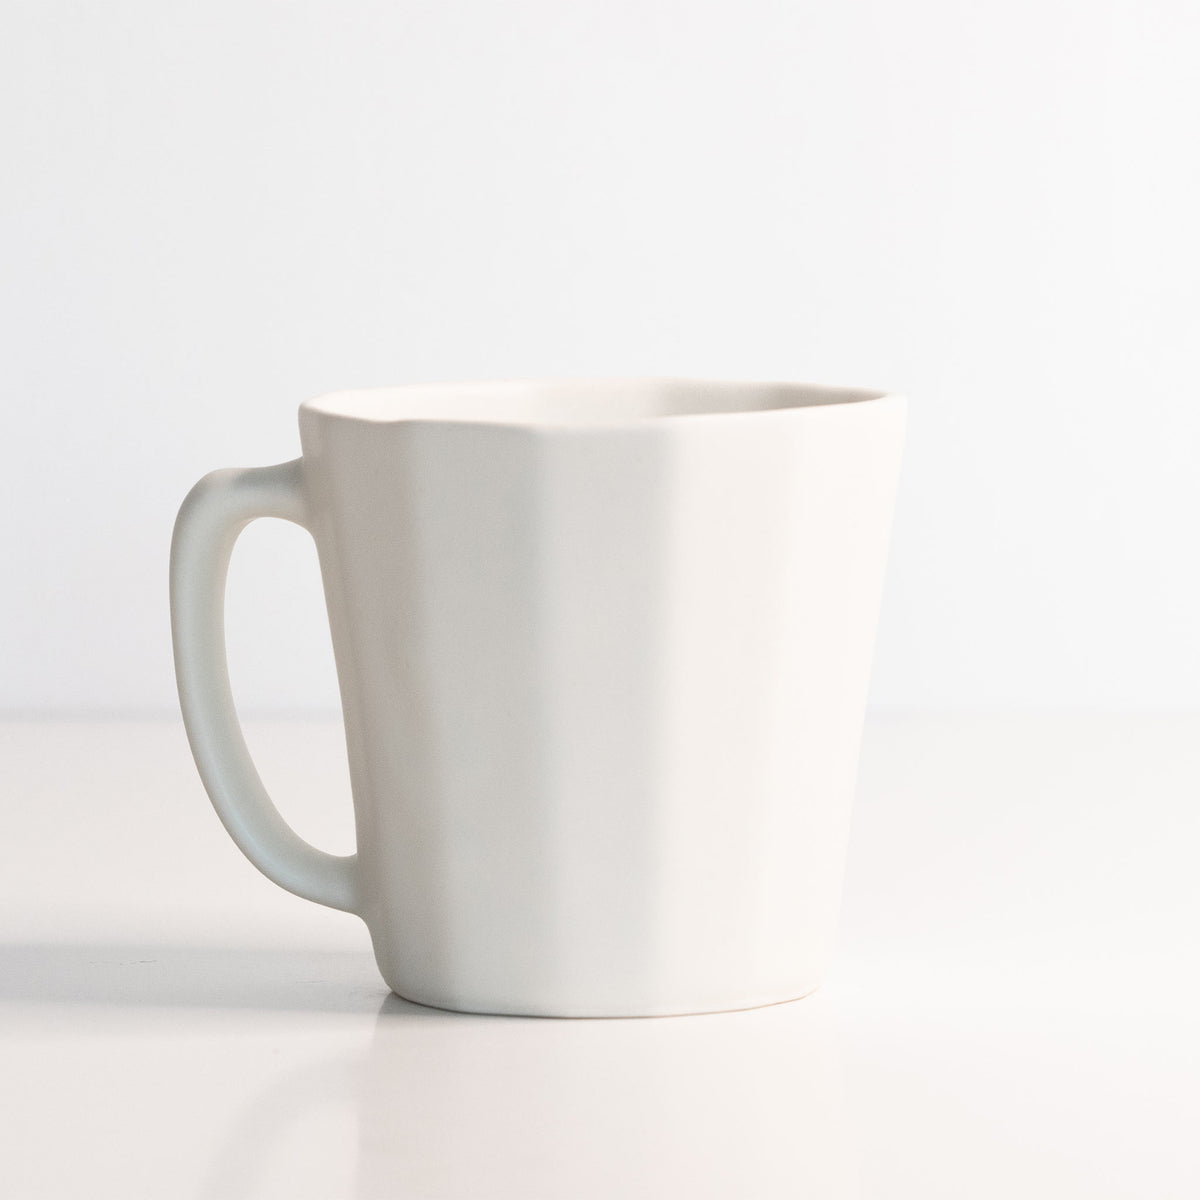 Fancy Espresso Cups Ceramic Coffee Mug Personalized Tea Cup Saucer